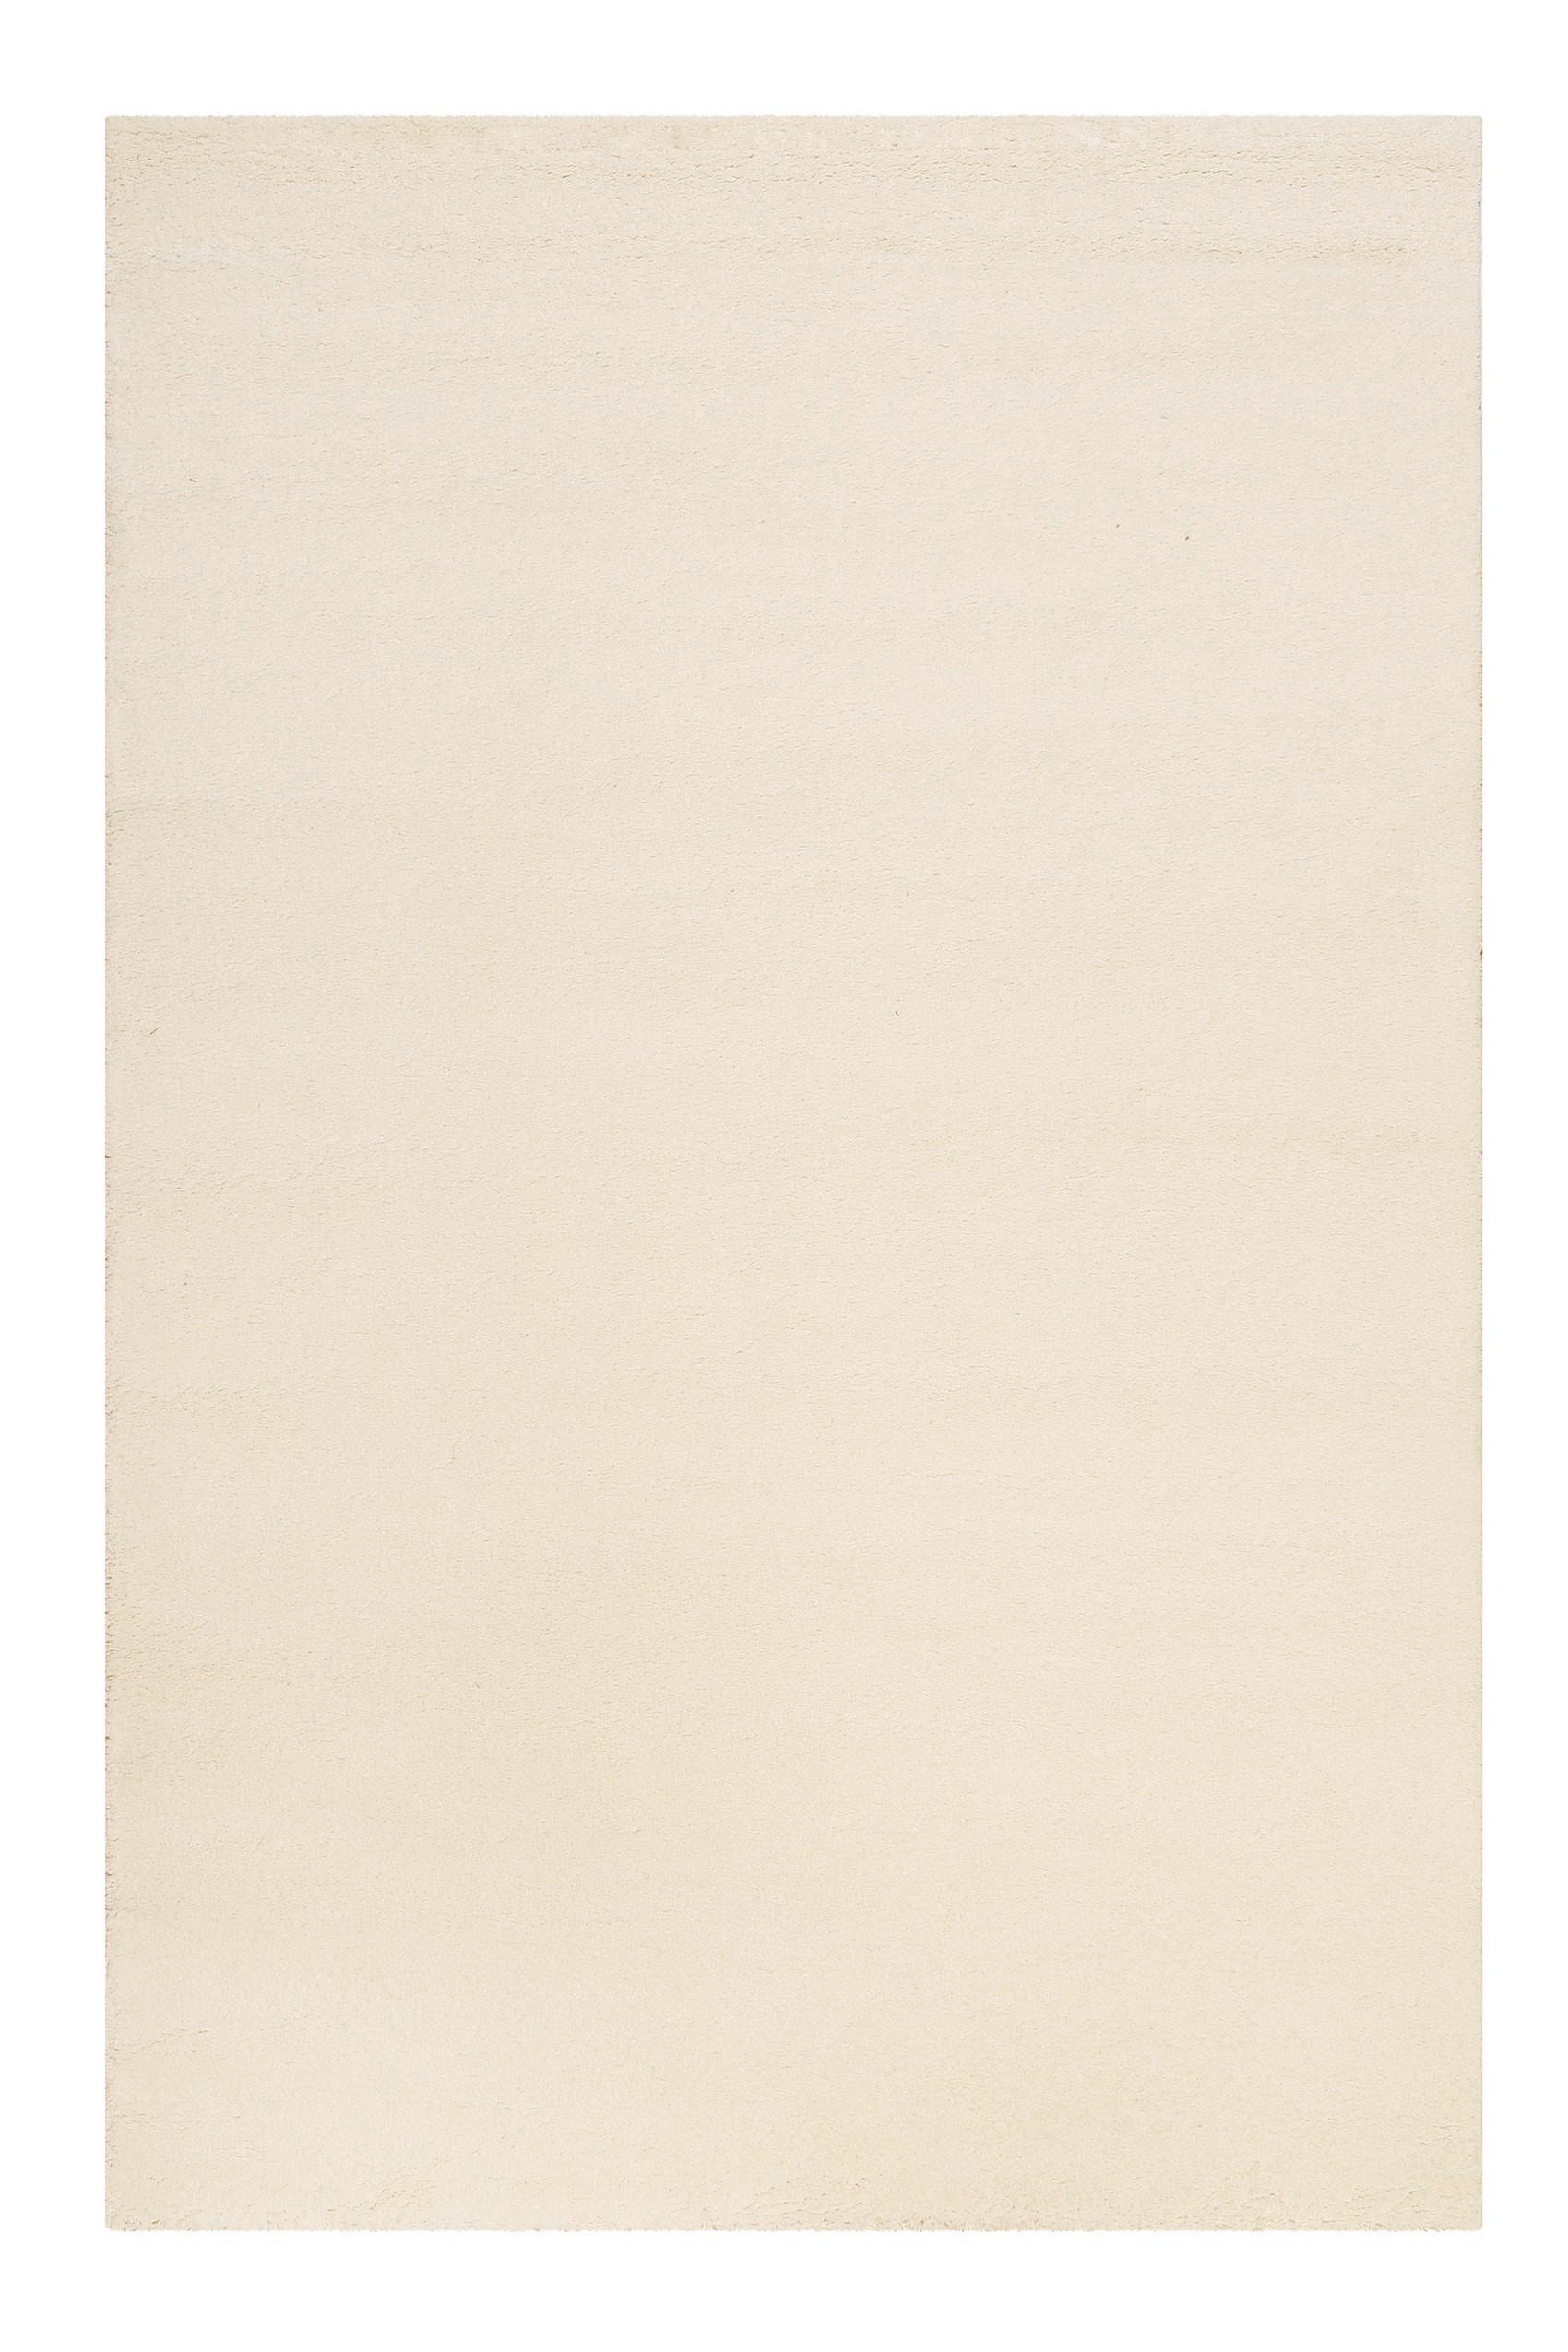 WEBTEPPICH  80/150 cm  Weiß   - Weiß, Design, Textil (80/150cm) - Novel